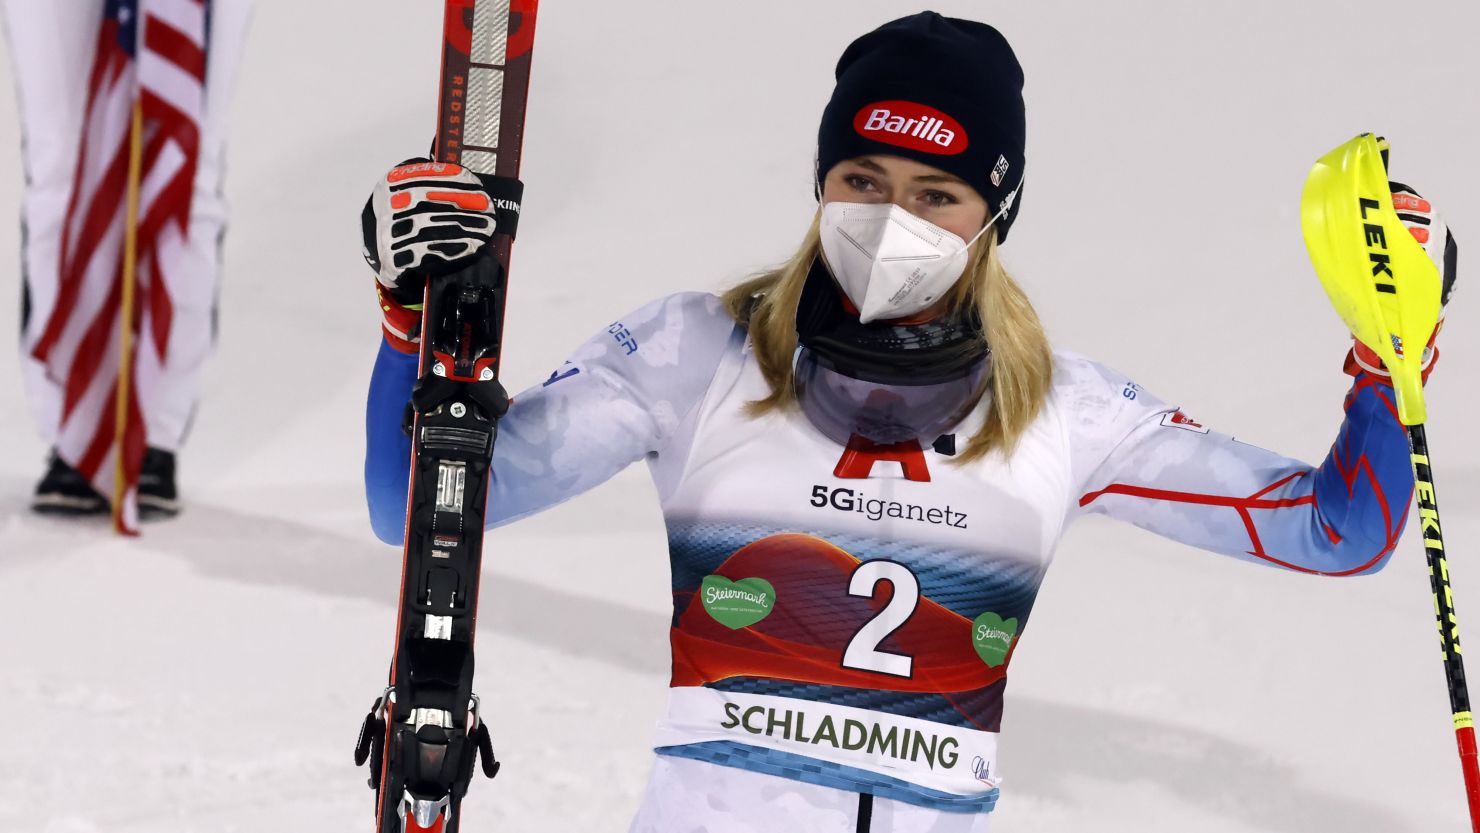 Mikaela Shiffrin celebrates after taking the slalom win in Schladming, Austria.